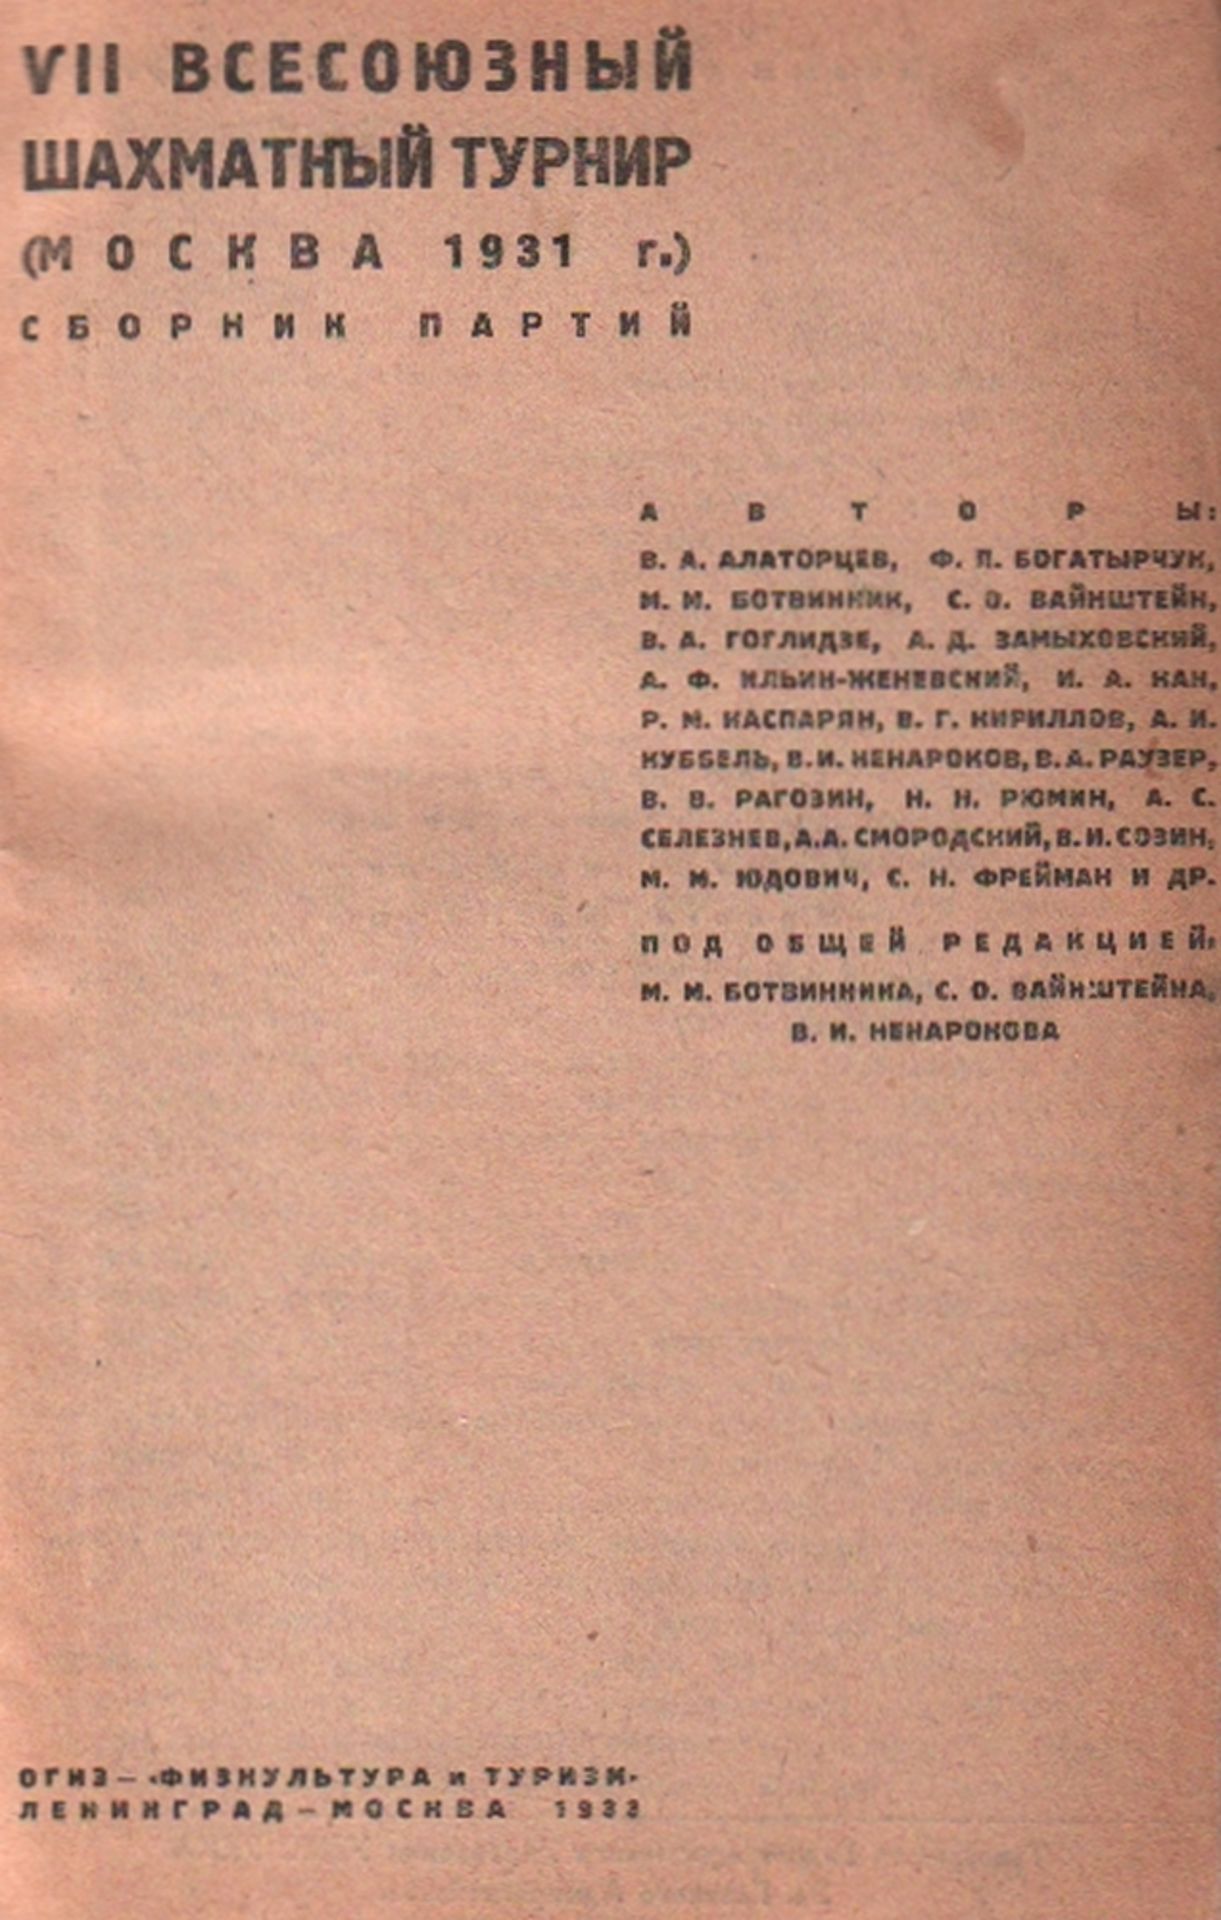 Moskau 1931. Alatorzew, W. A., F. P. Bogatyrtschuk, M. M. Botwinnik u. a. VII wsesojusnyj